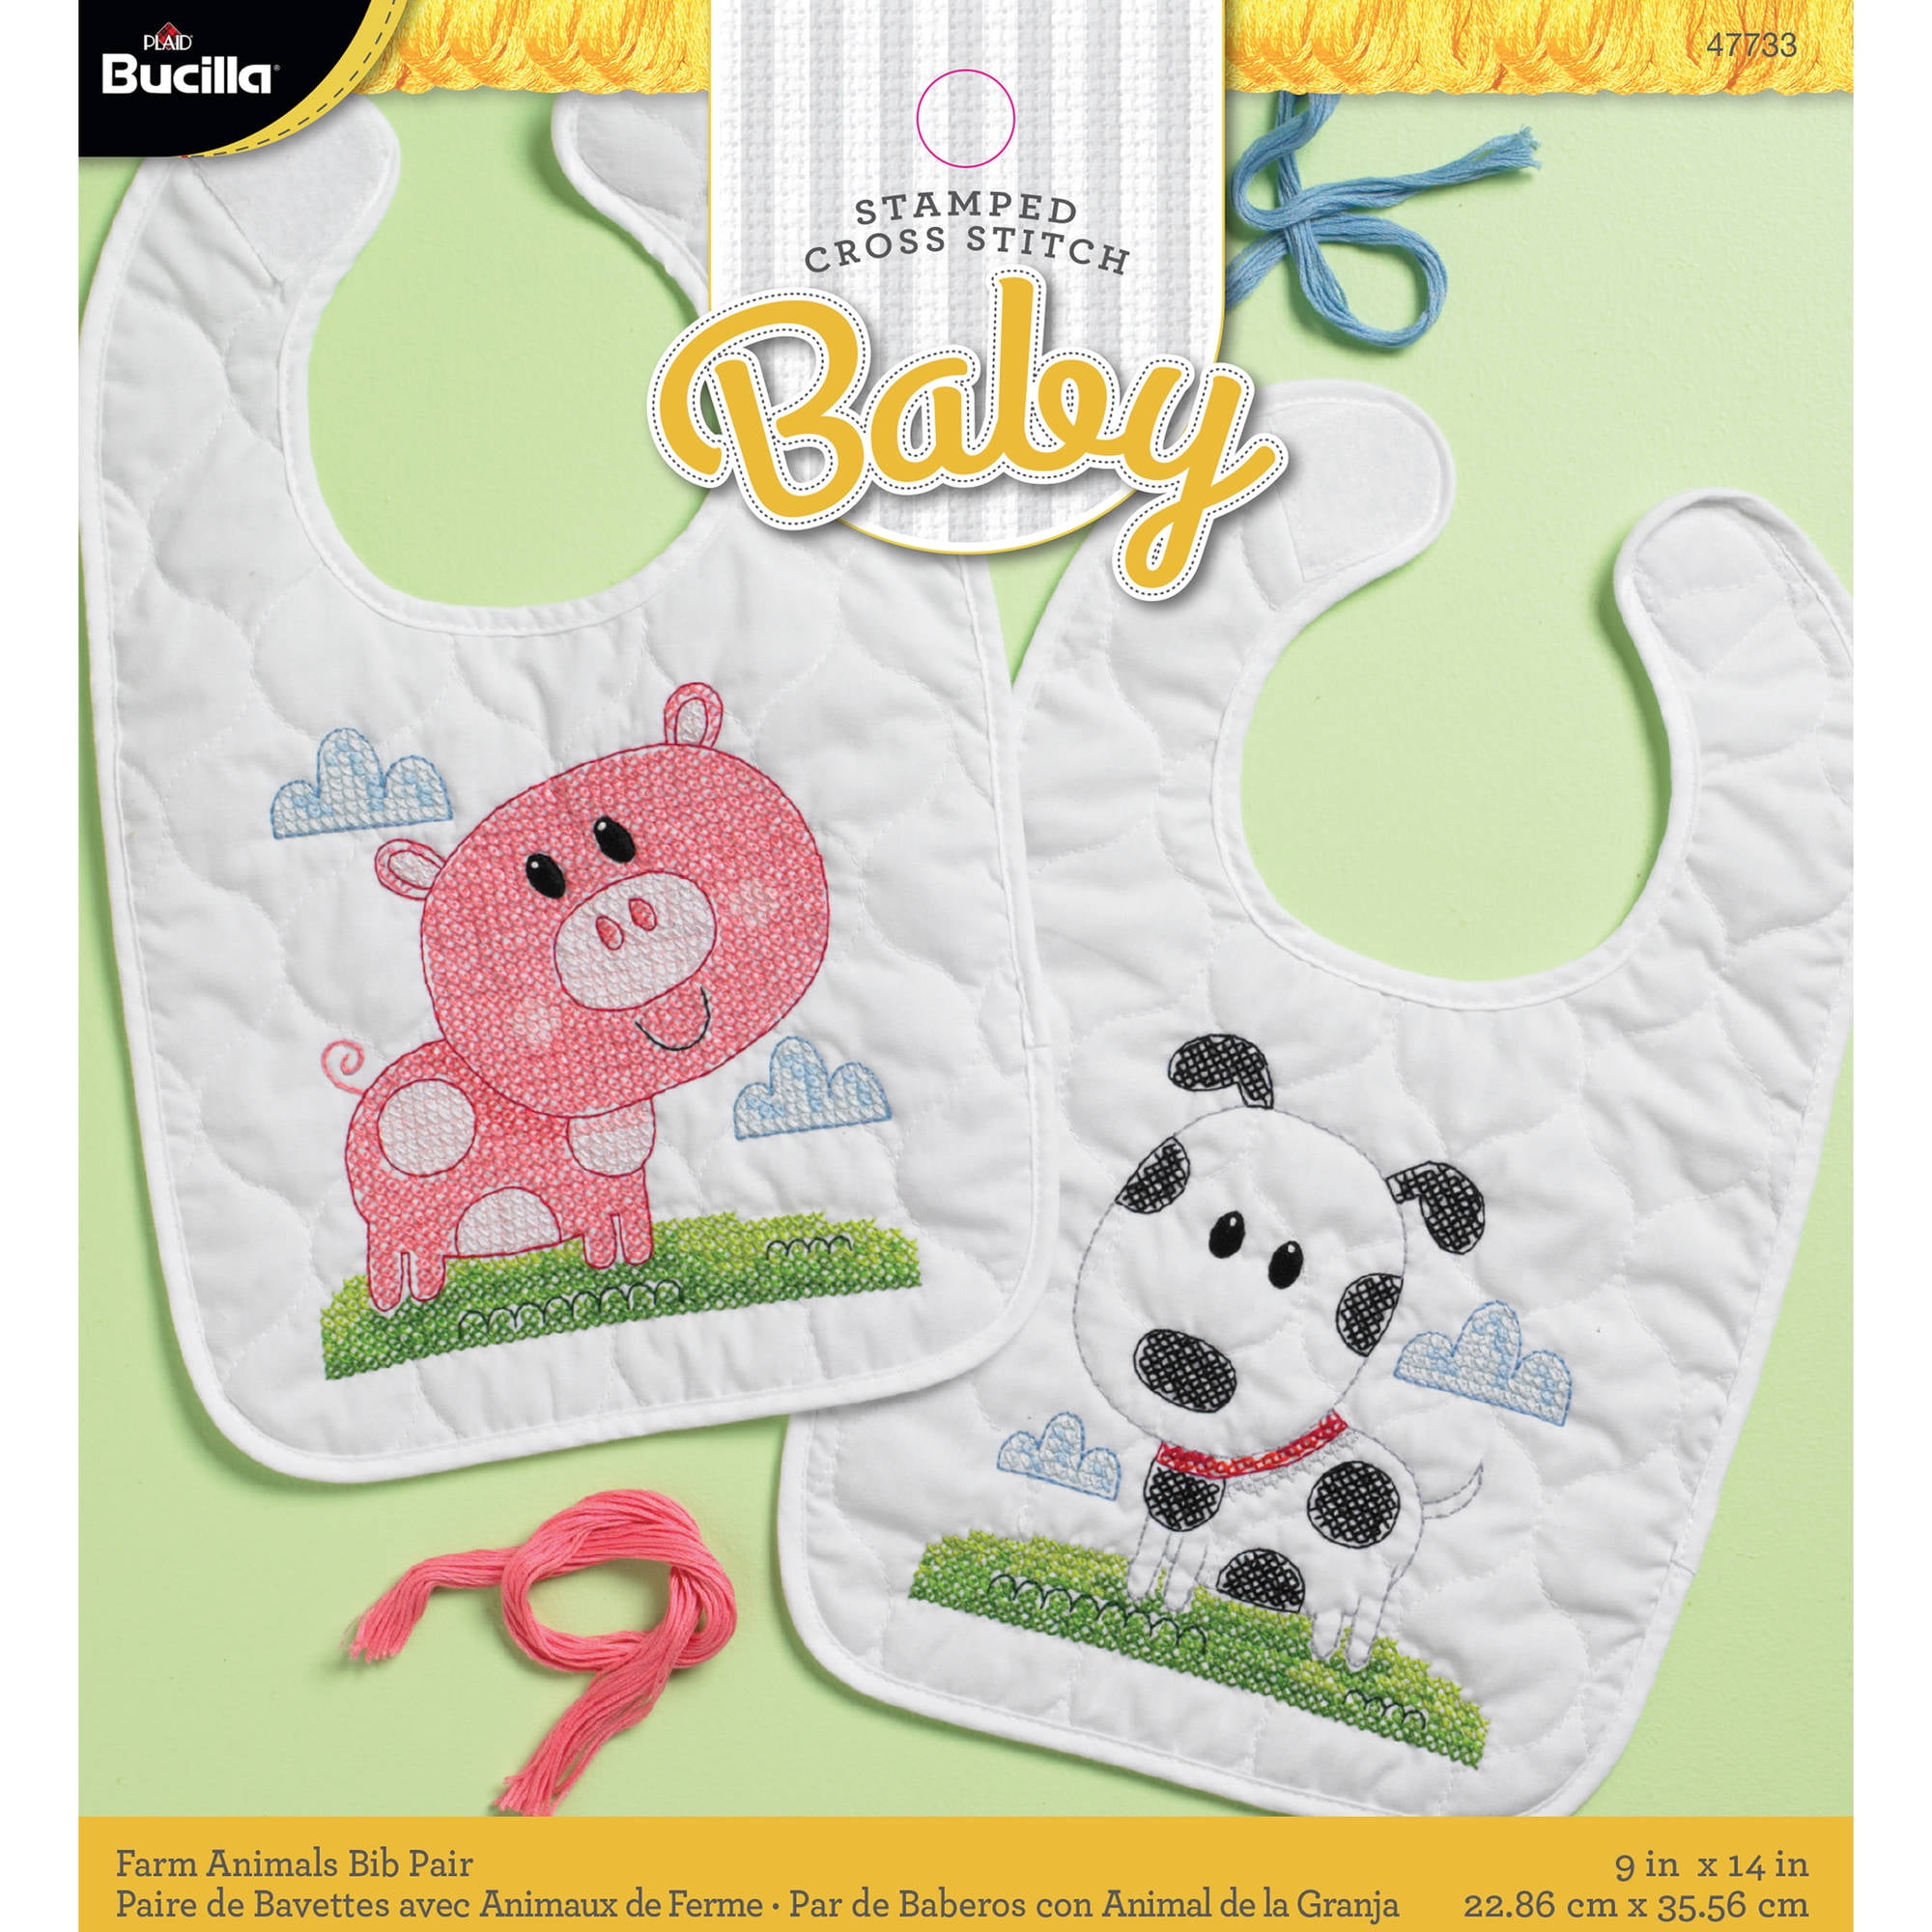 Bucilla Stamped Cross Stitch Crib Cover Kit 34X43-Springtime Baby Animals  49472E - GettyCrafts